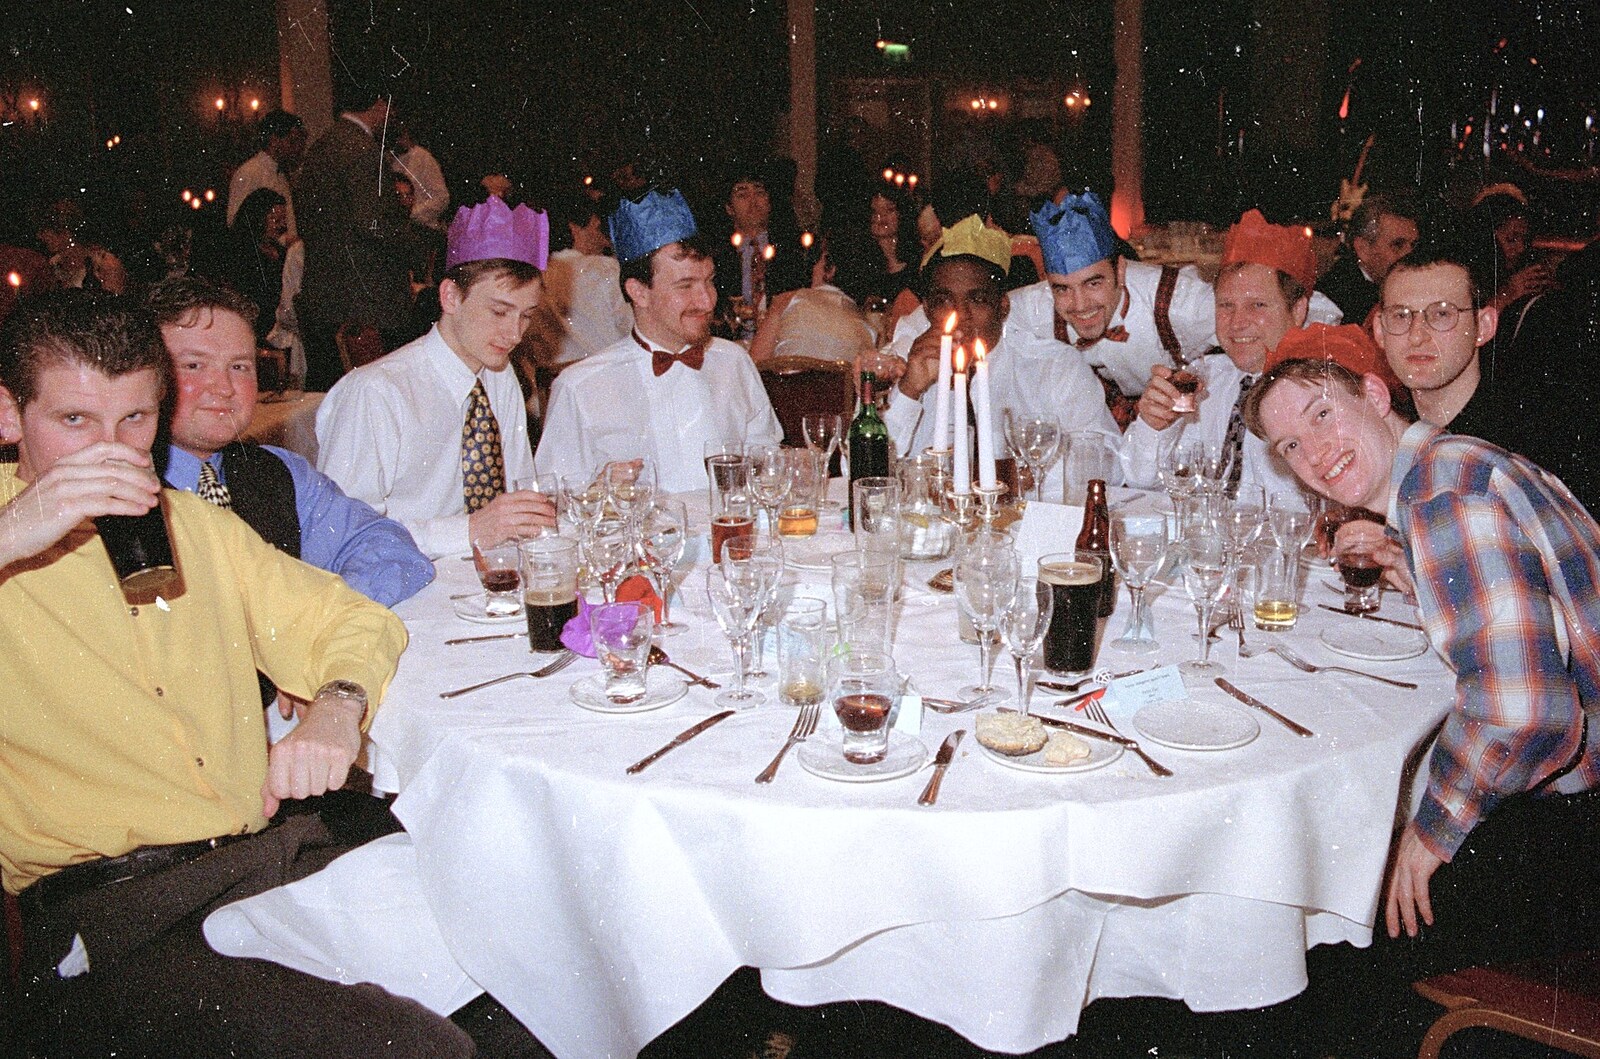 Stuart and Sarah's CISU Wedding, Naworth Castle, Brampton, Cumbria - 21st September 1996: The CISU table: Jon, Foxy, Andrew, Phil, Carl, Trev, Brian, Paul and Dougie